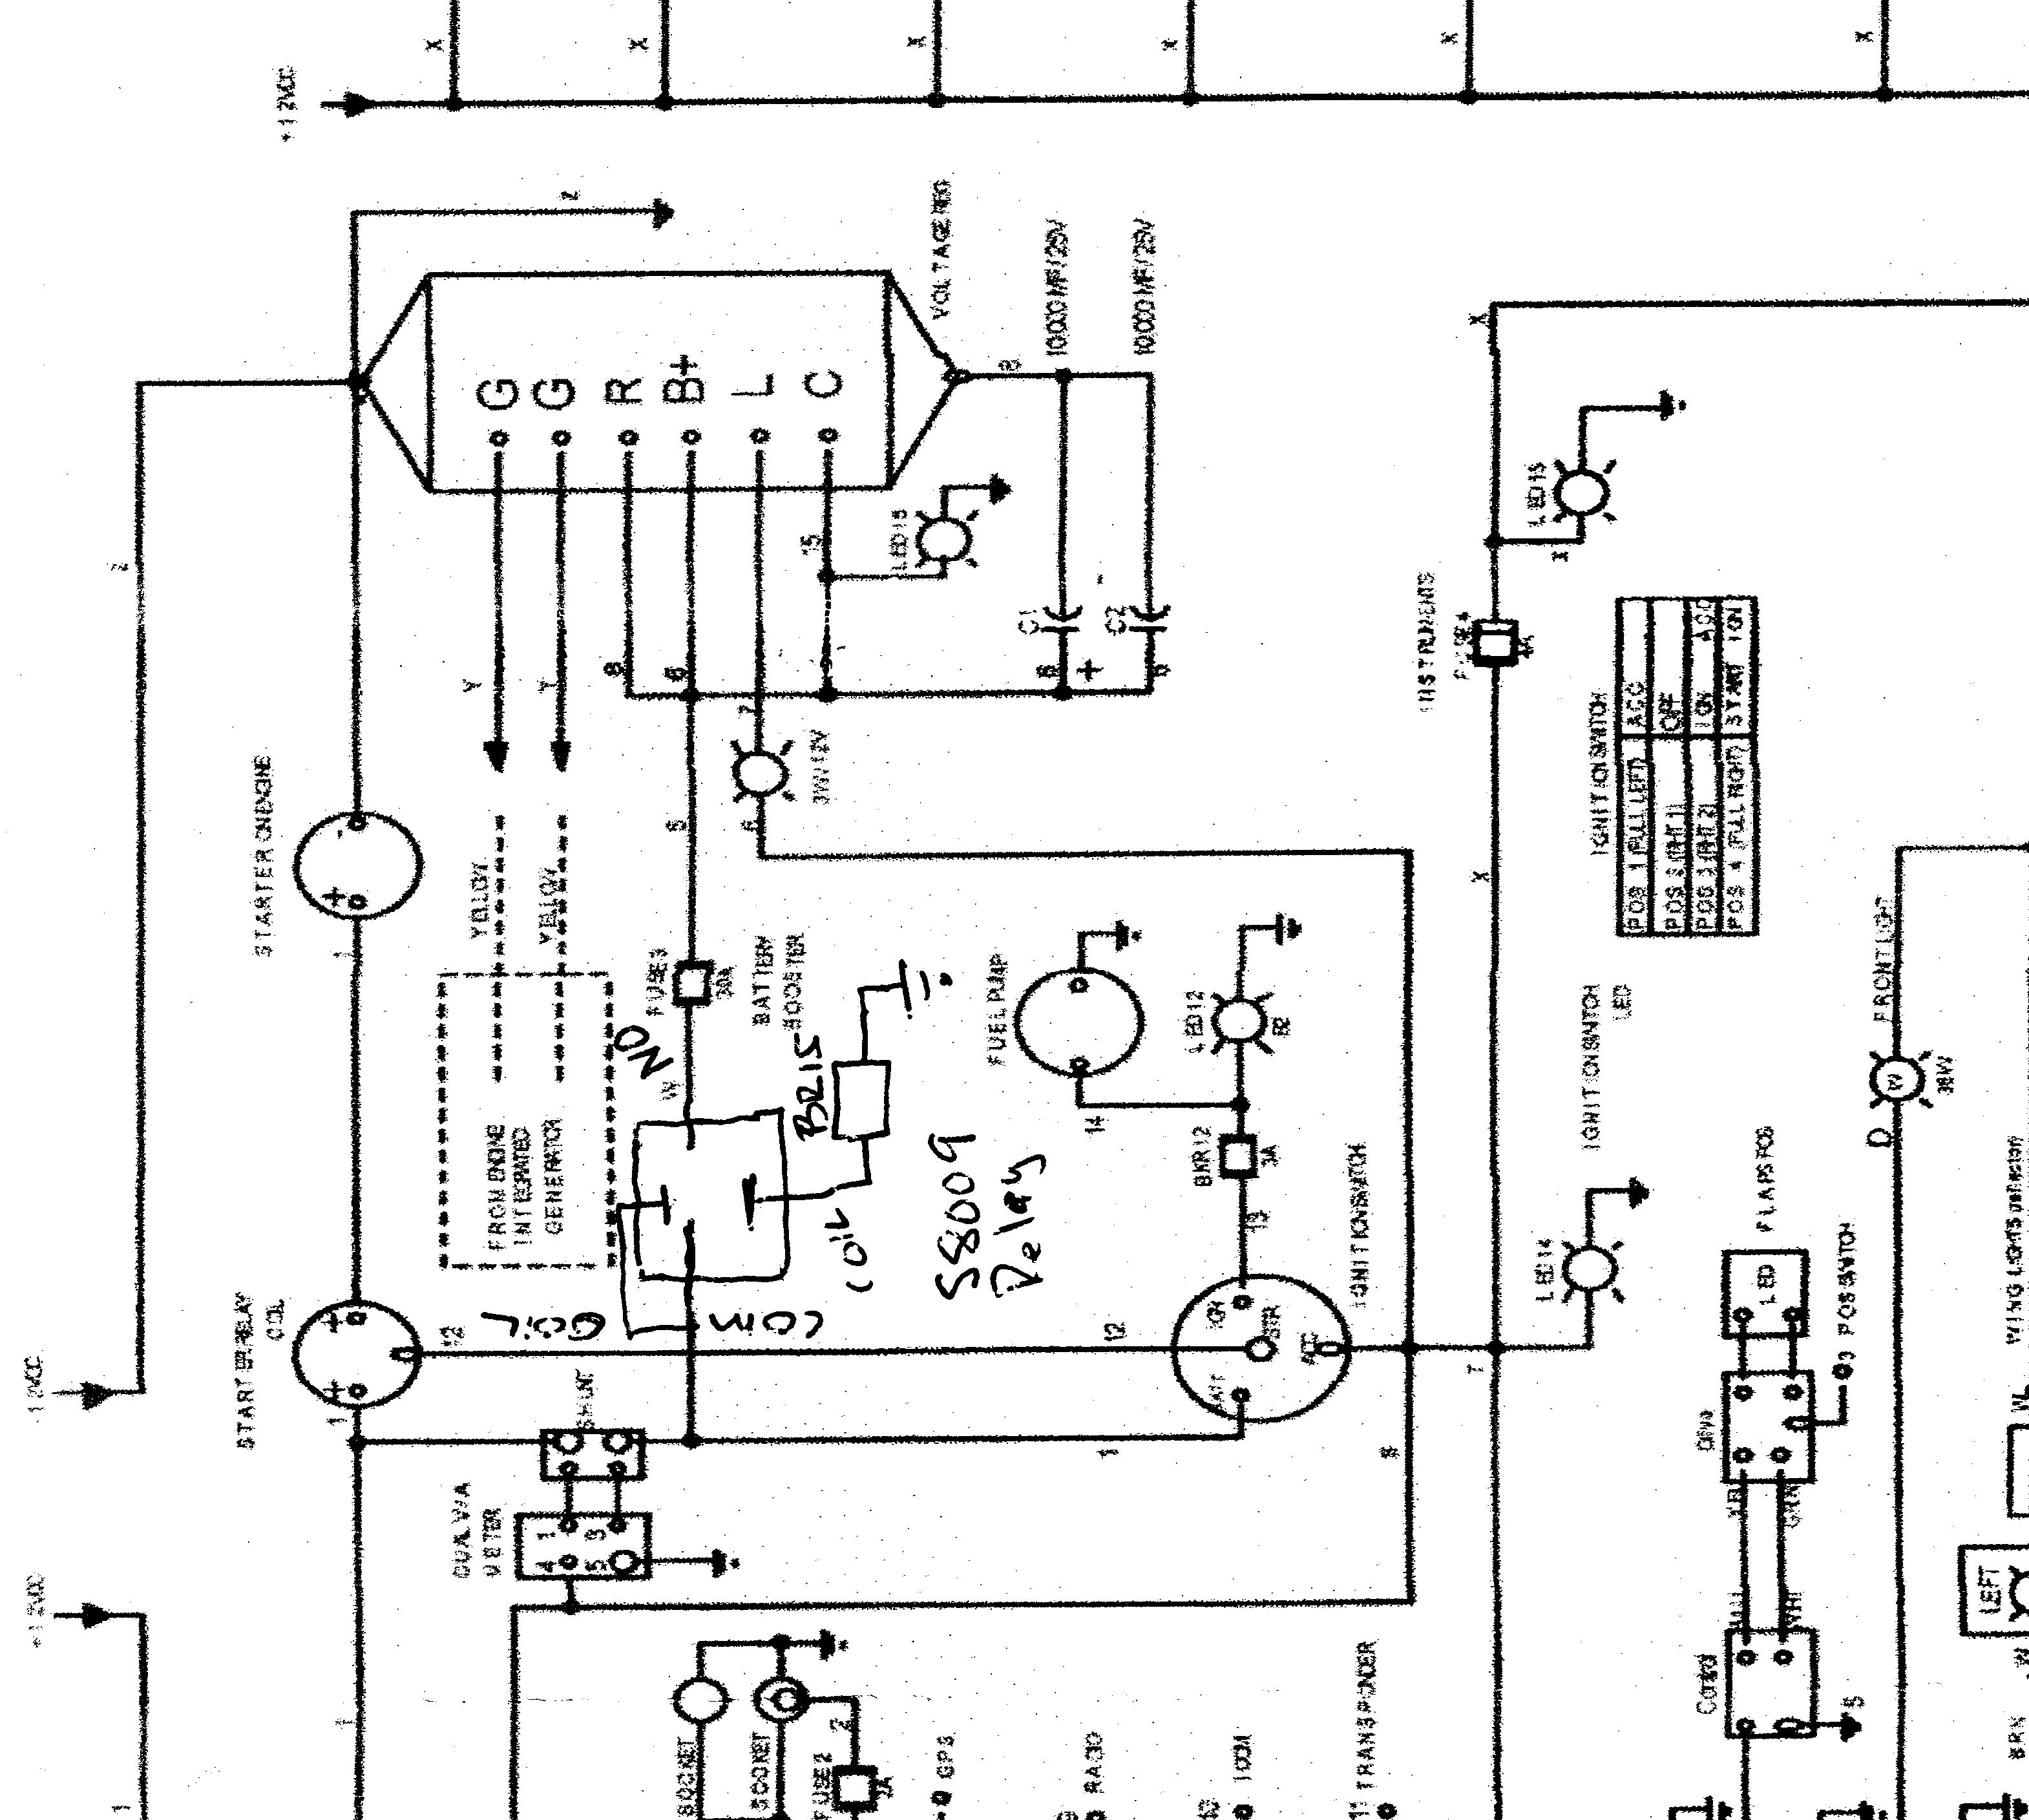 Rotax 912 Ignition Wiring Diagram - Wiring Diagram